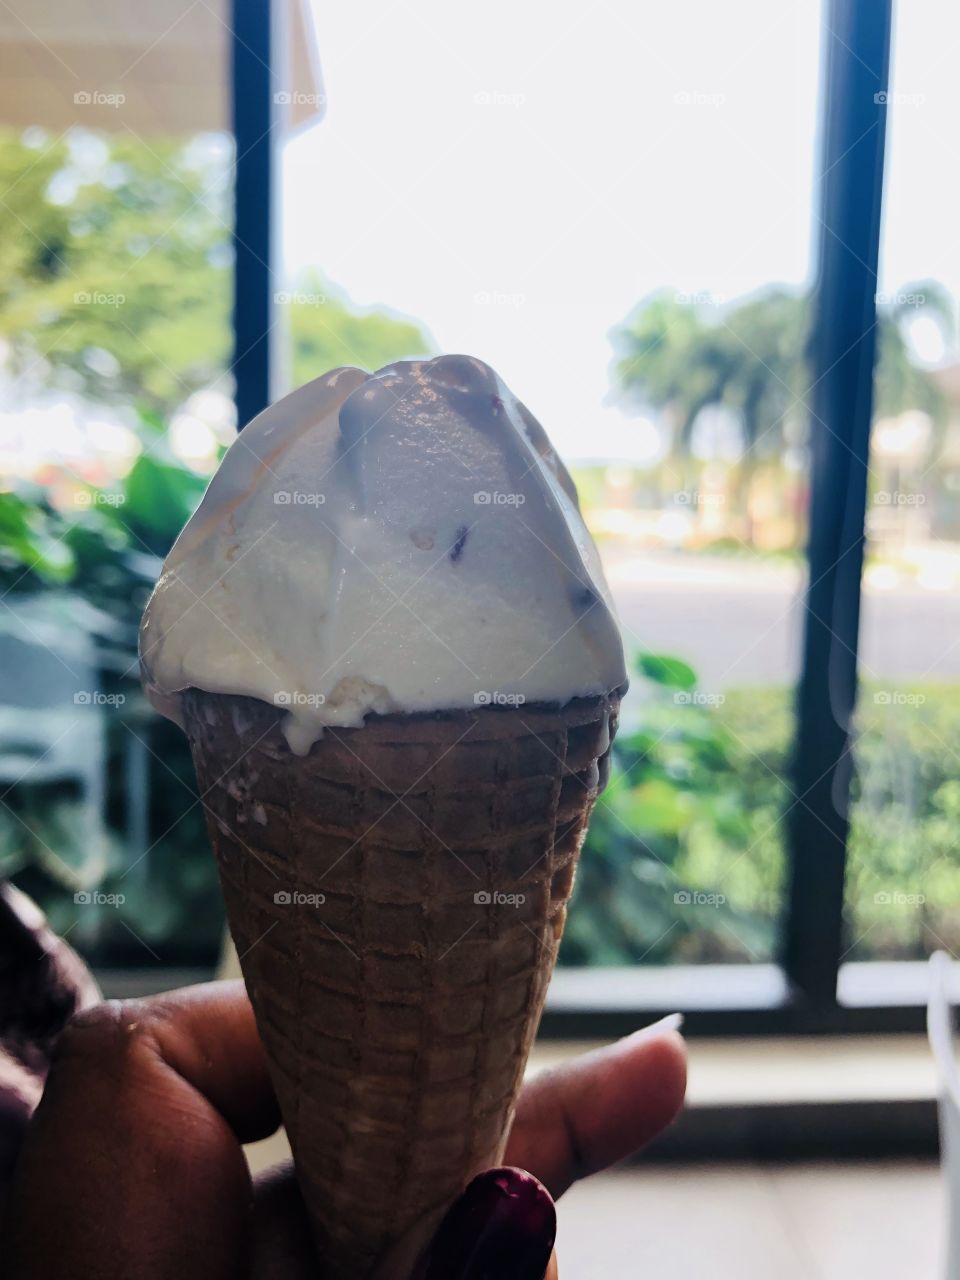 Fridays calls for an ice cream